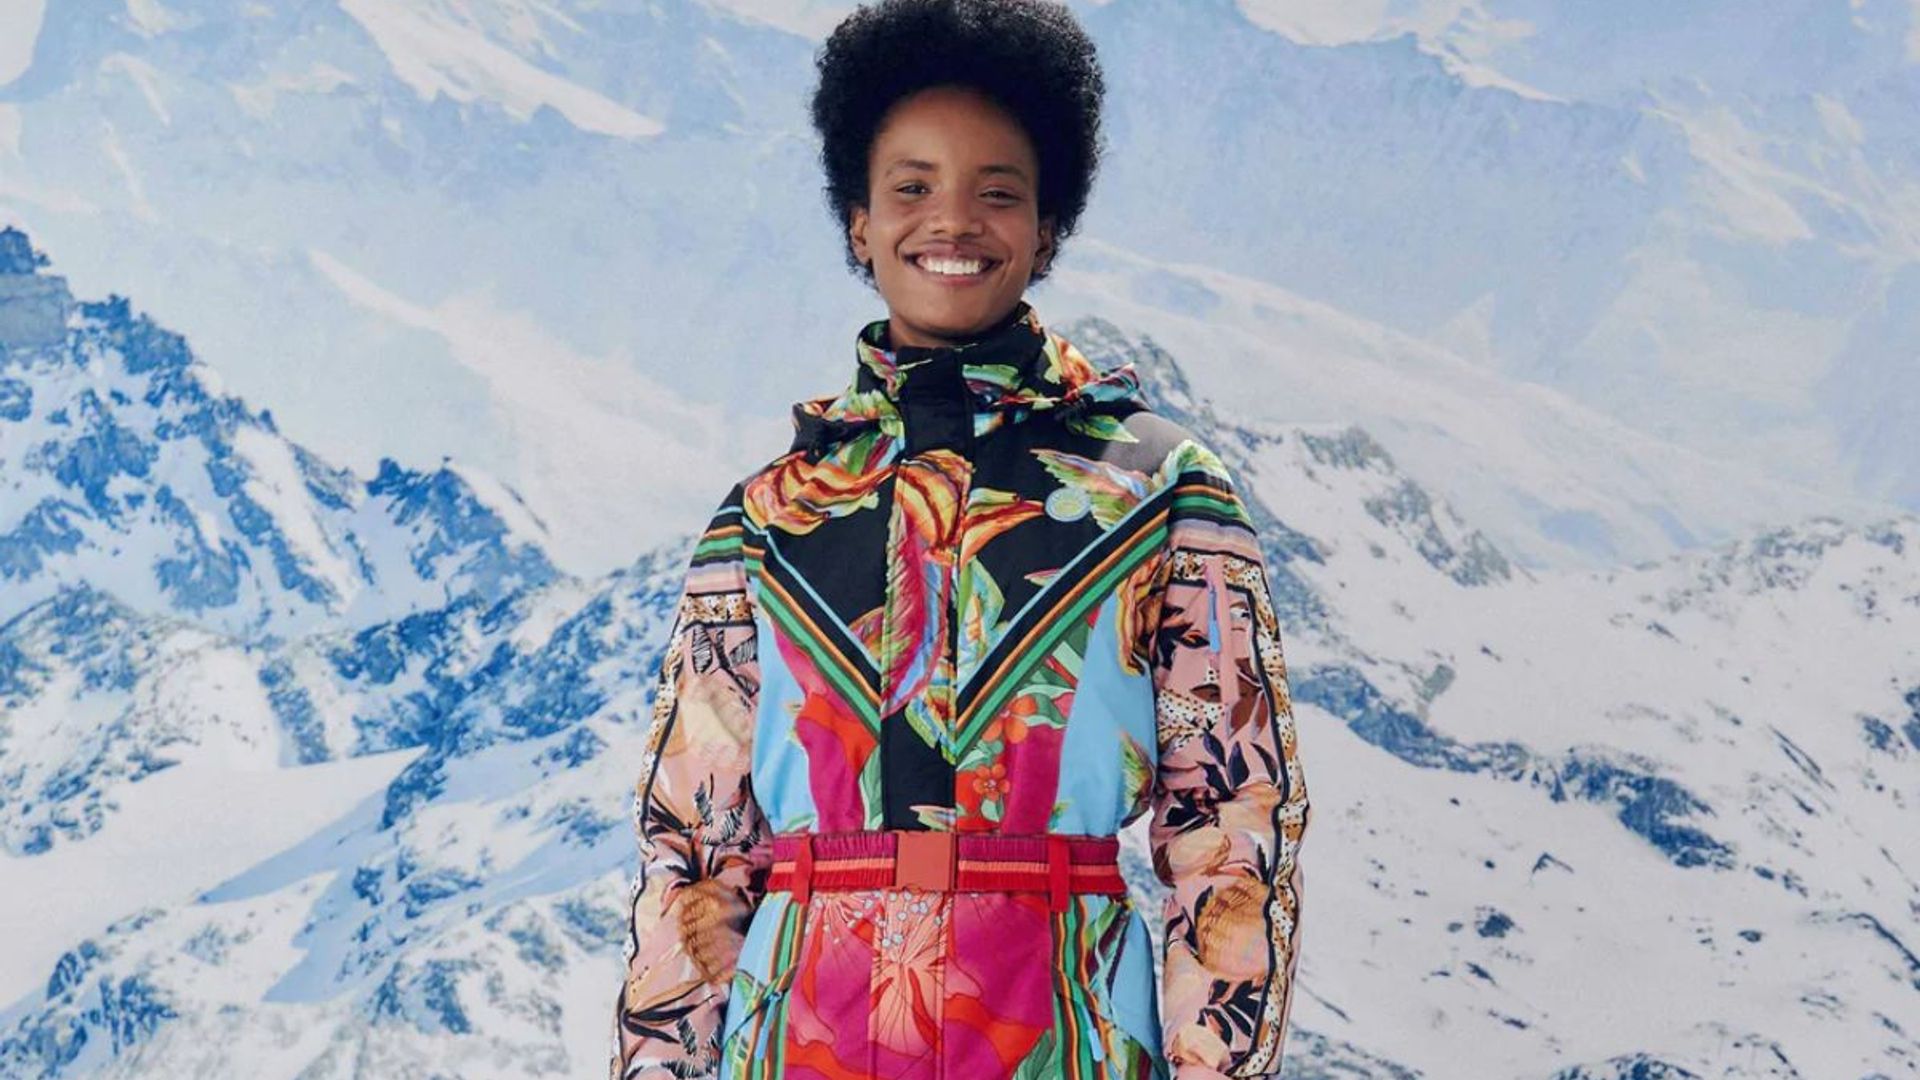 X Fusalp Printed Down Ski Jacket in Black - Pucci